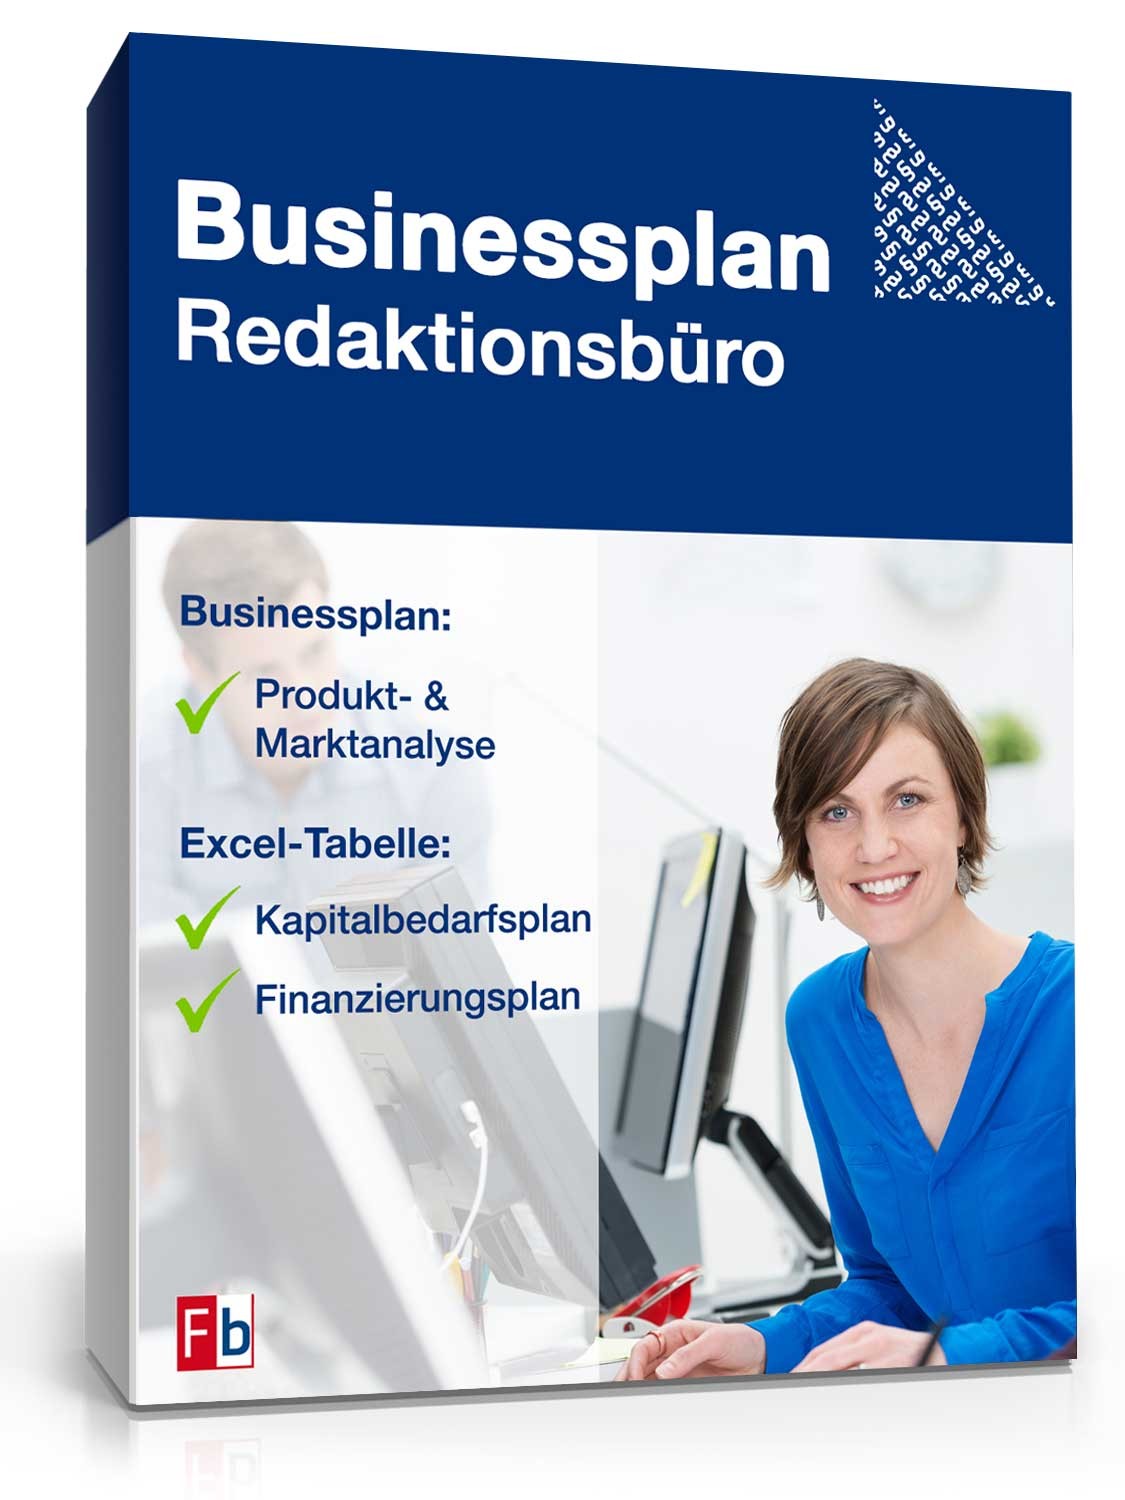 Hauptbild des Produkts: Businessplan Redaktionsbüro